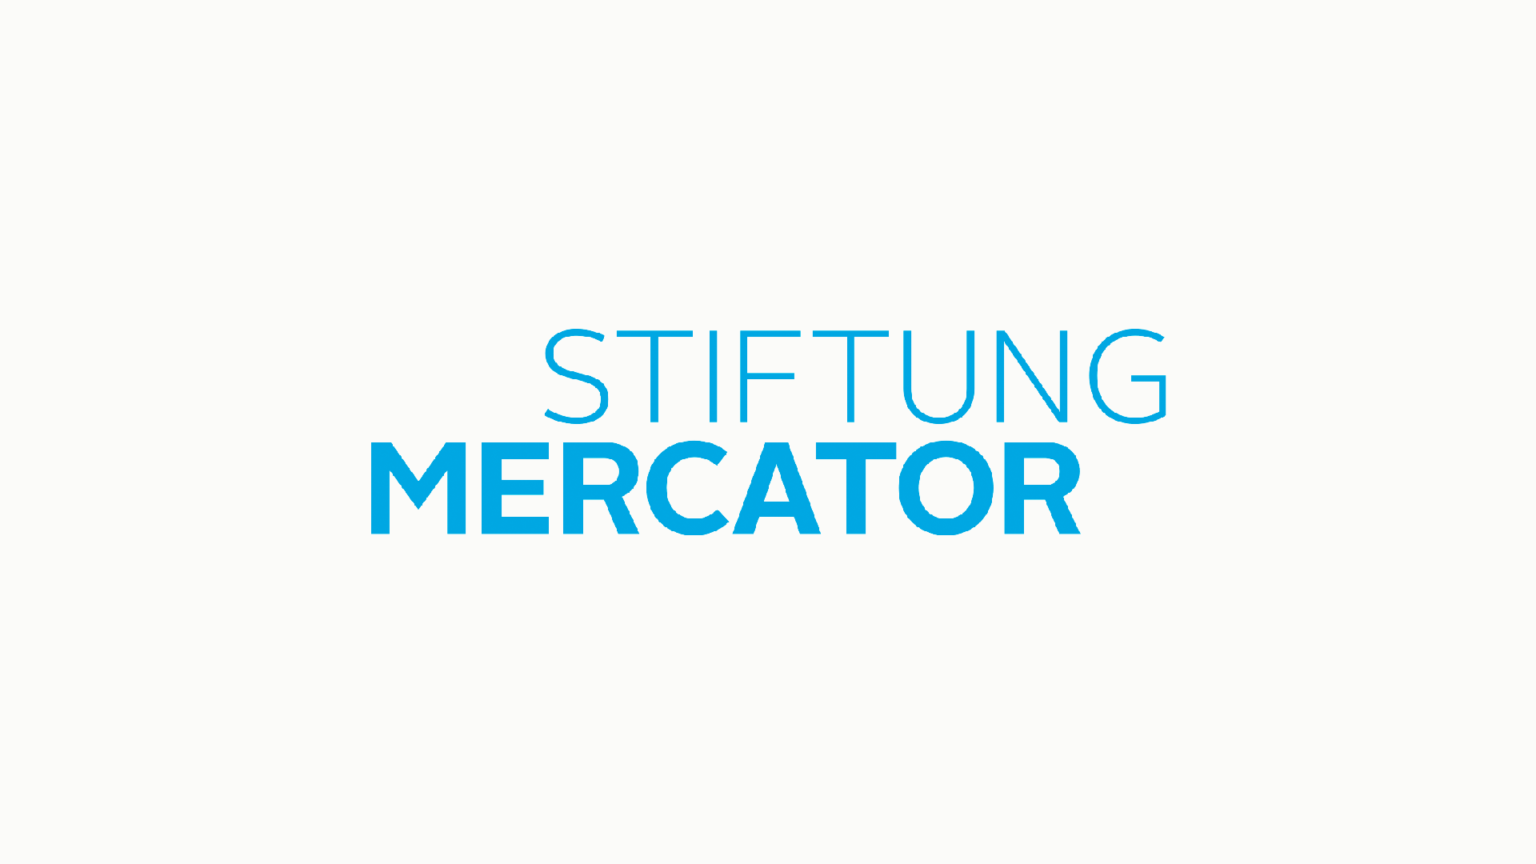 Stiftung Mercator Logo